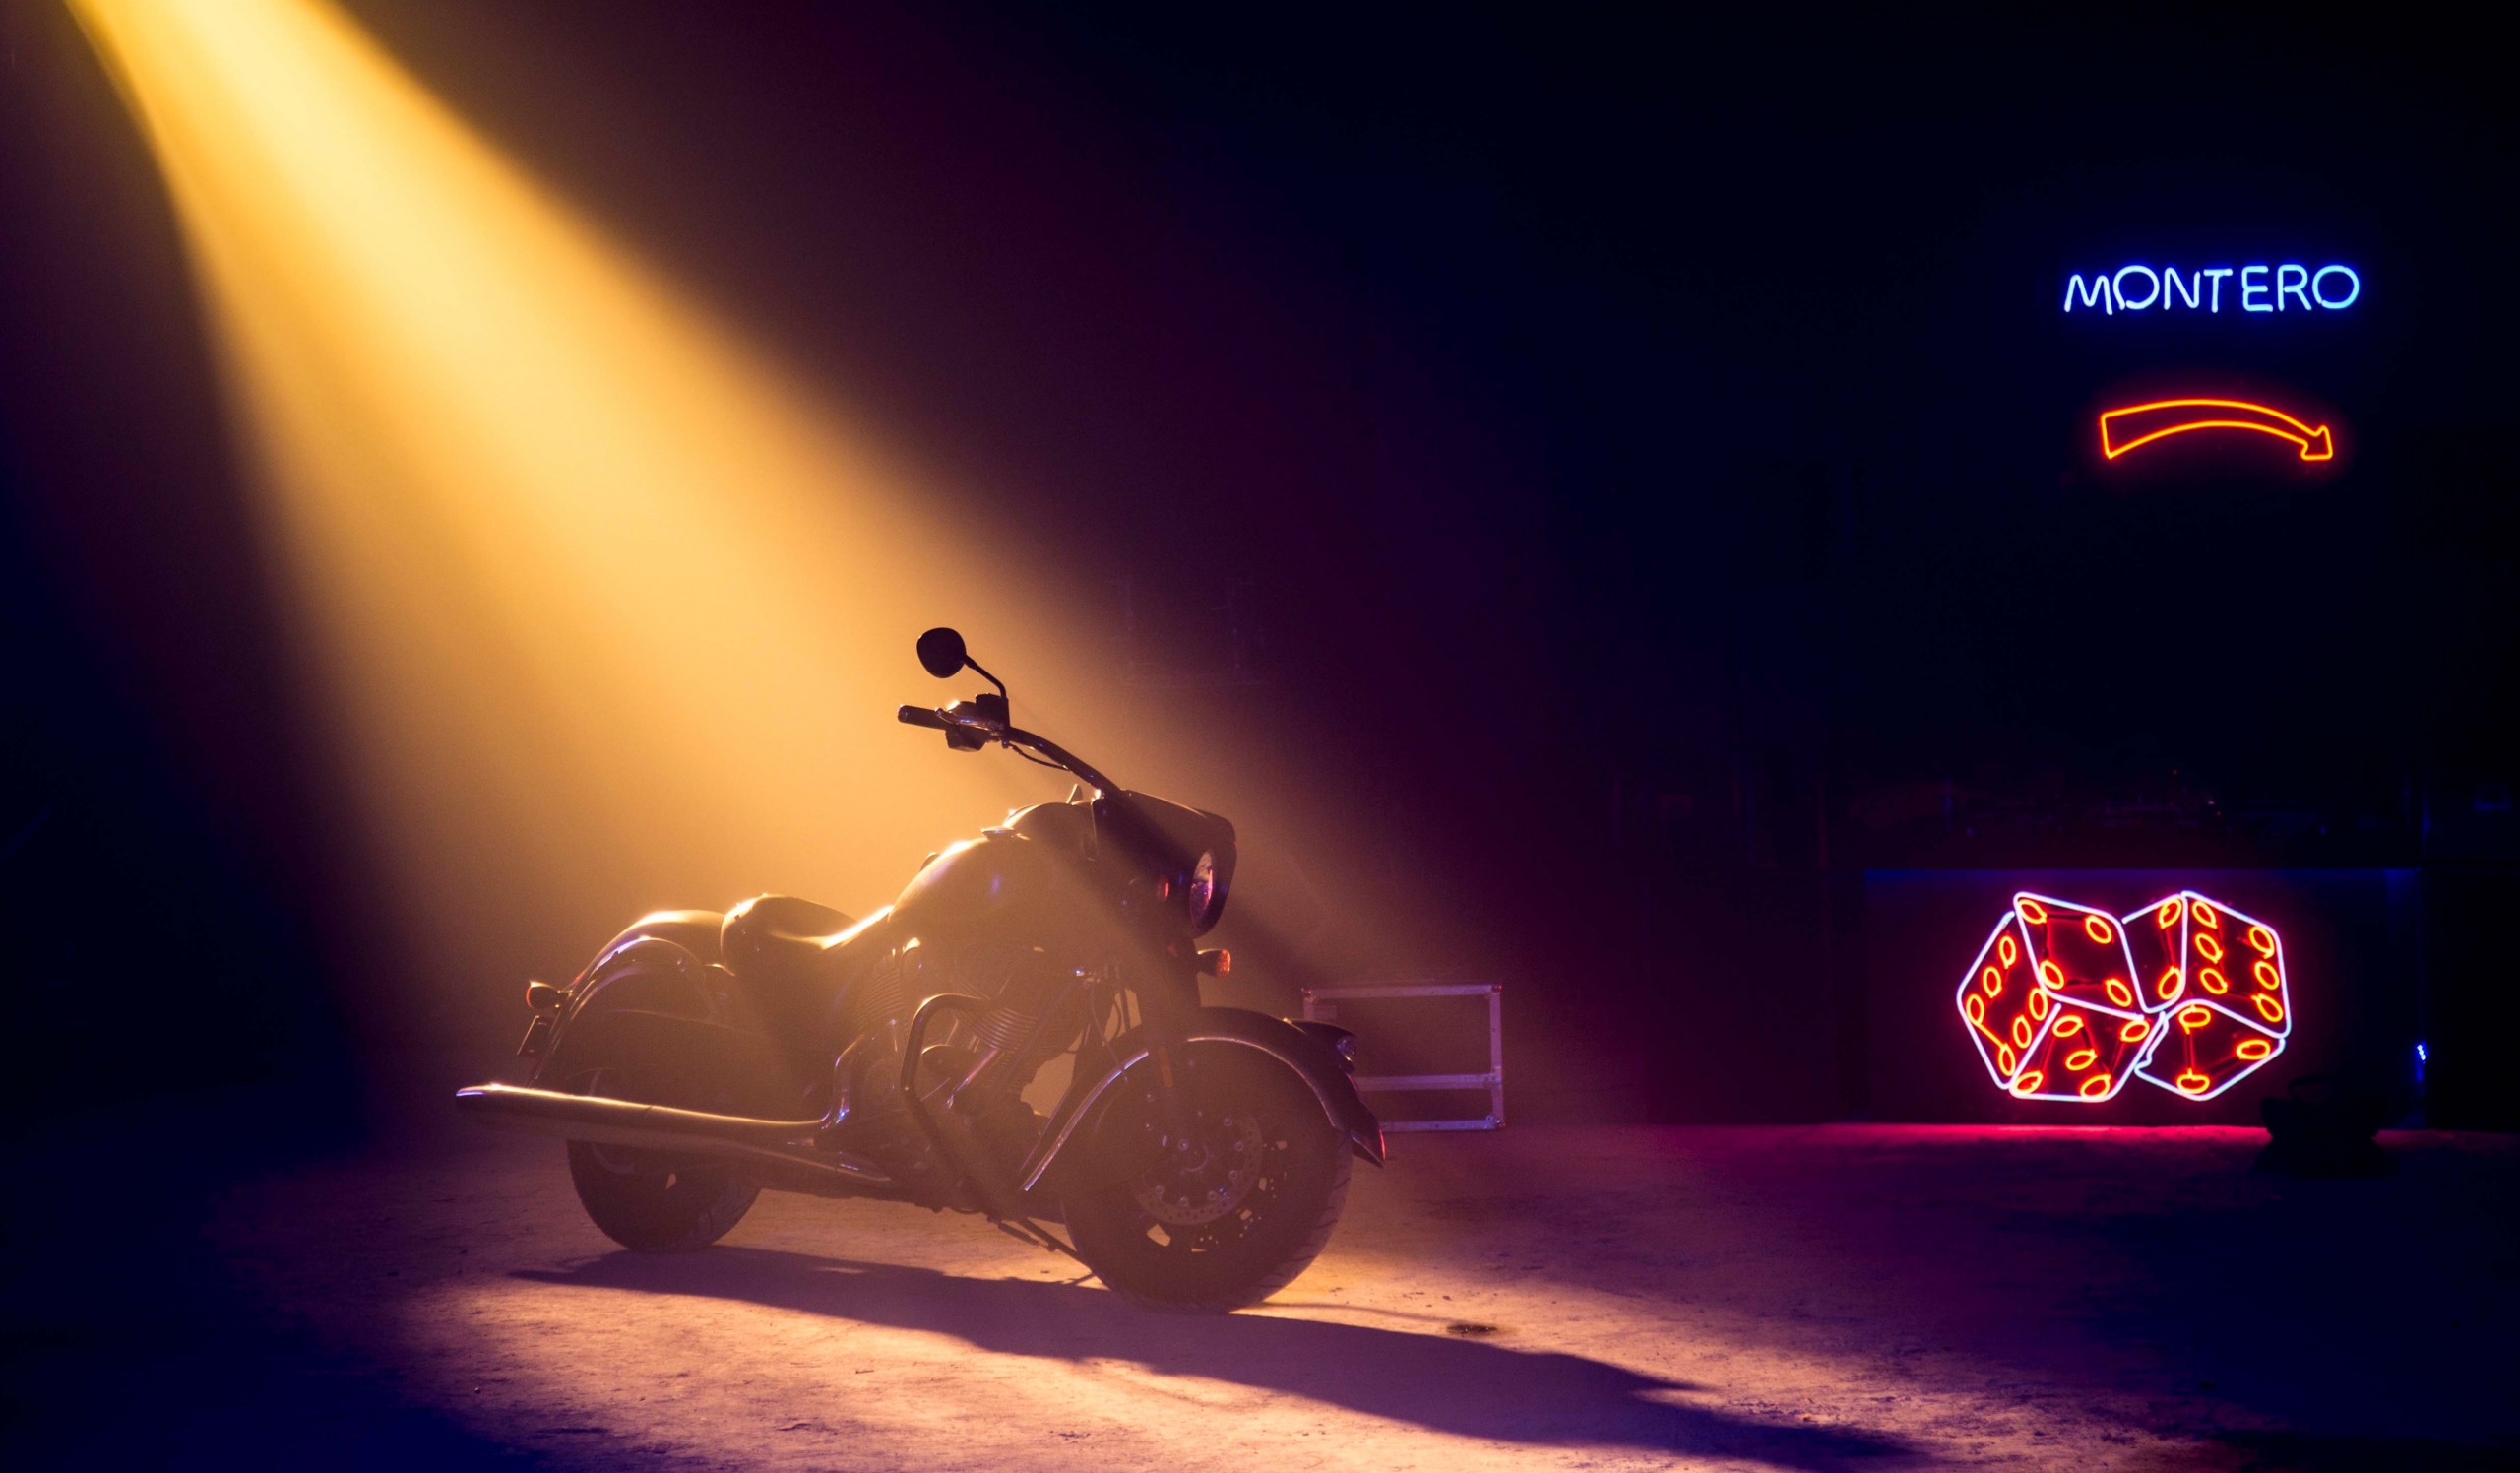 Superbike in the Spotlight